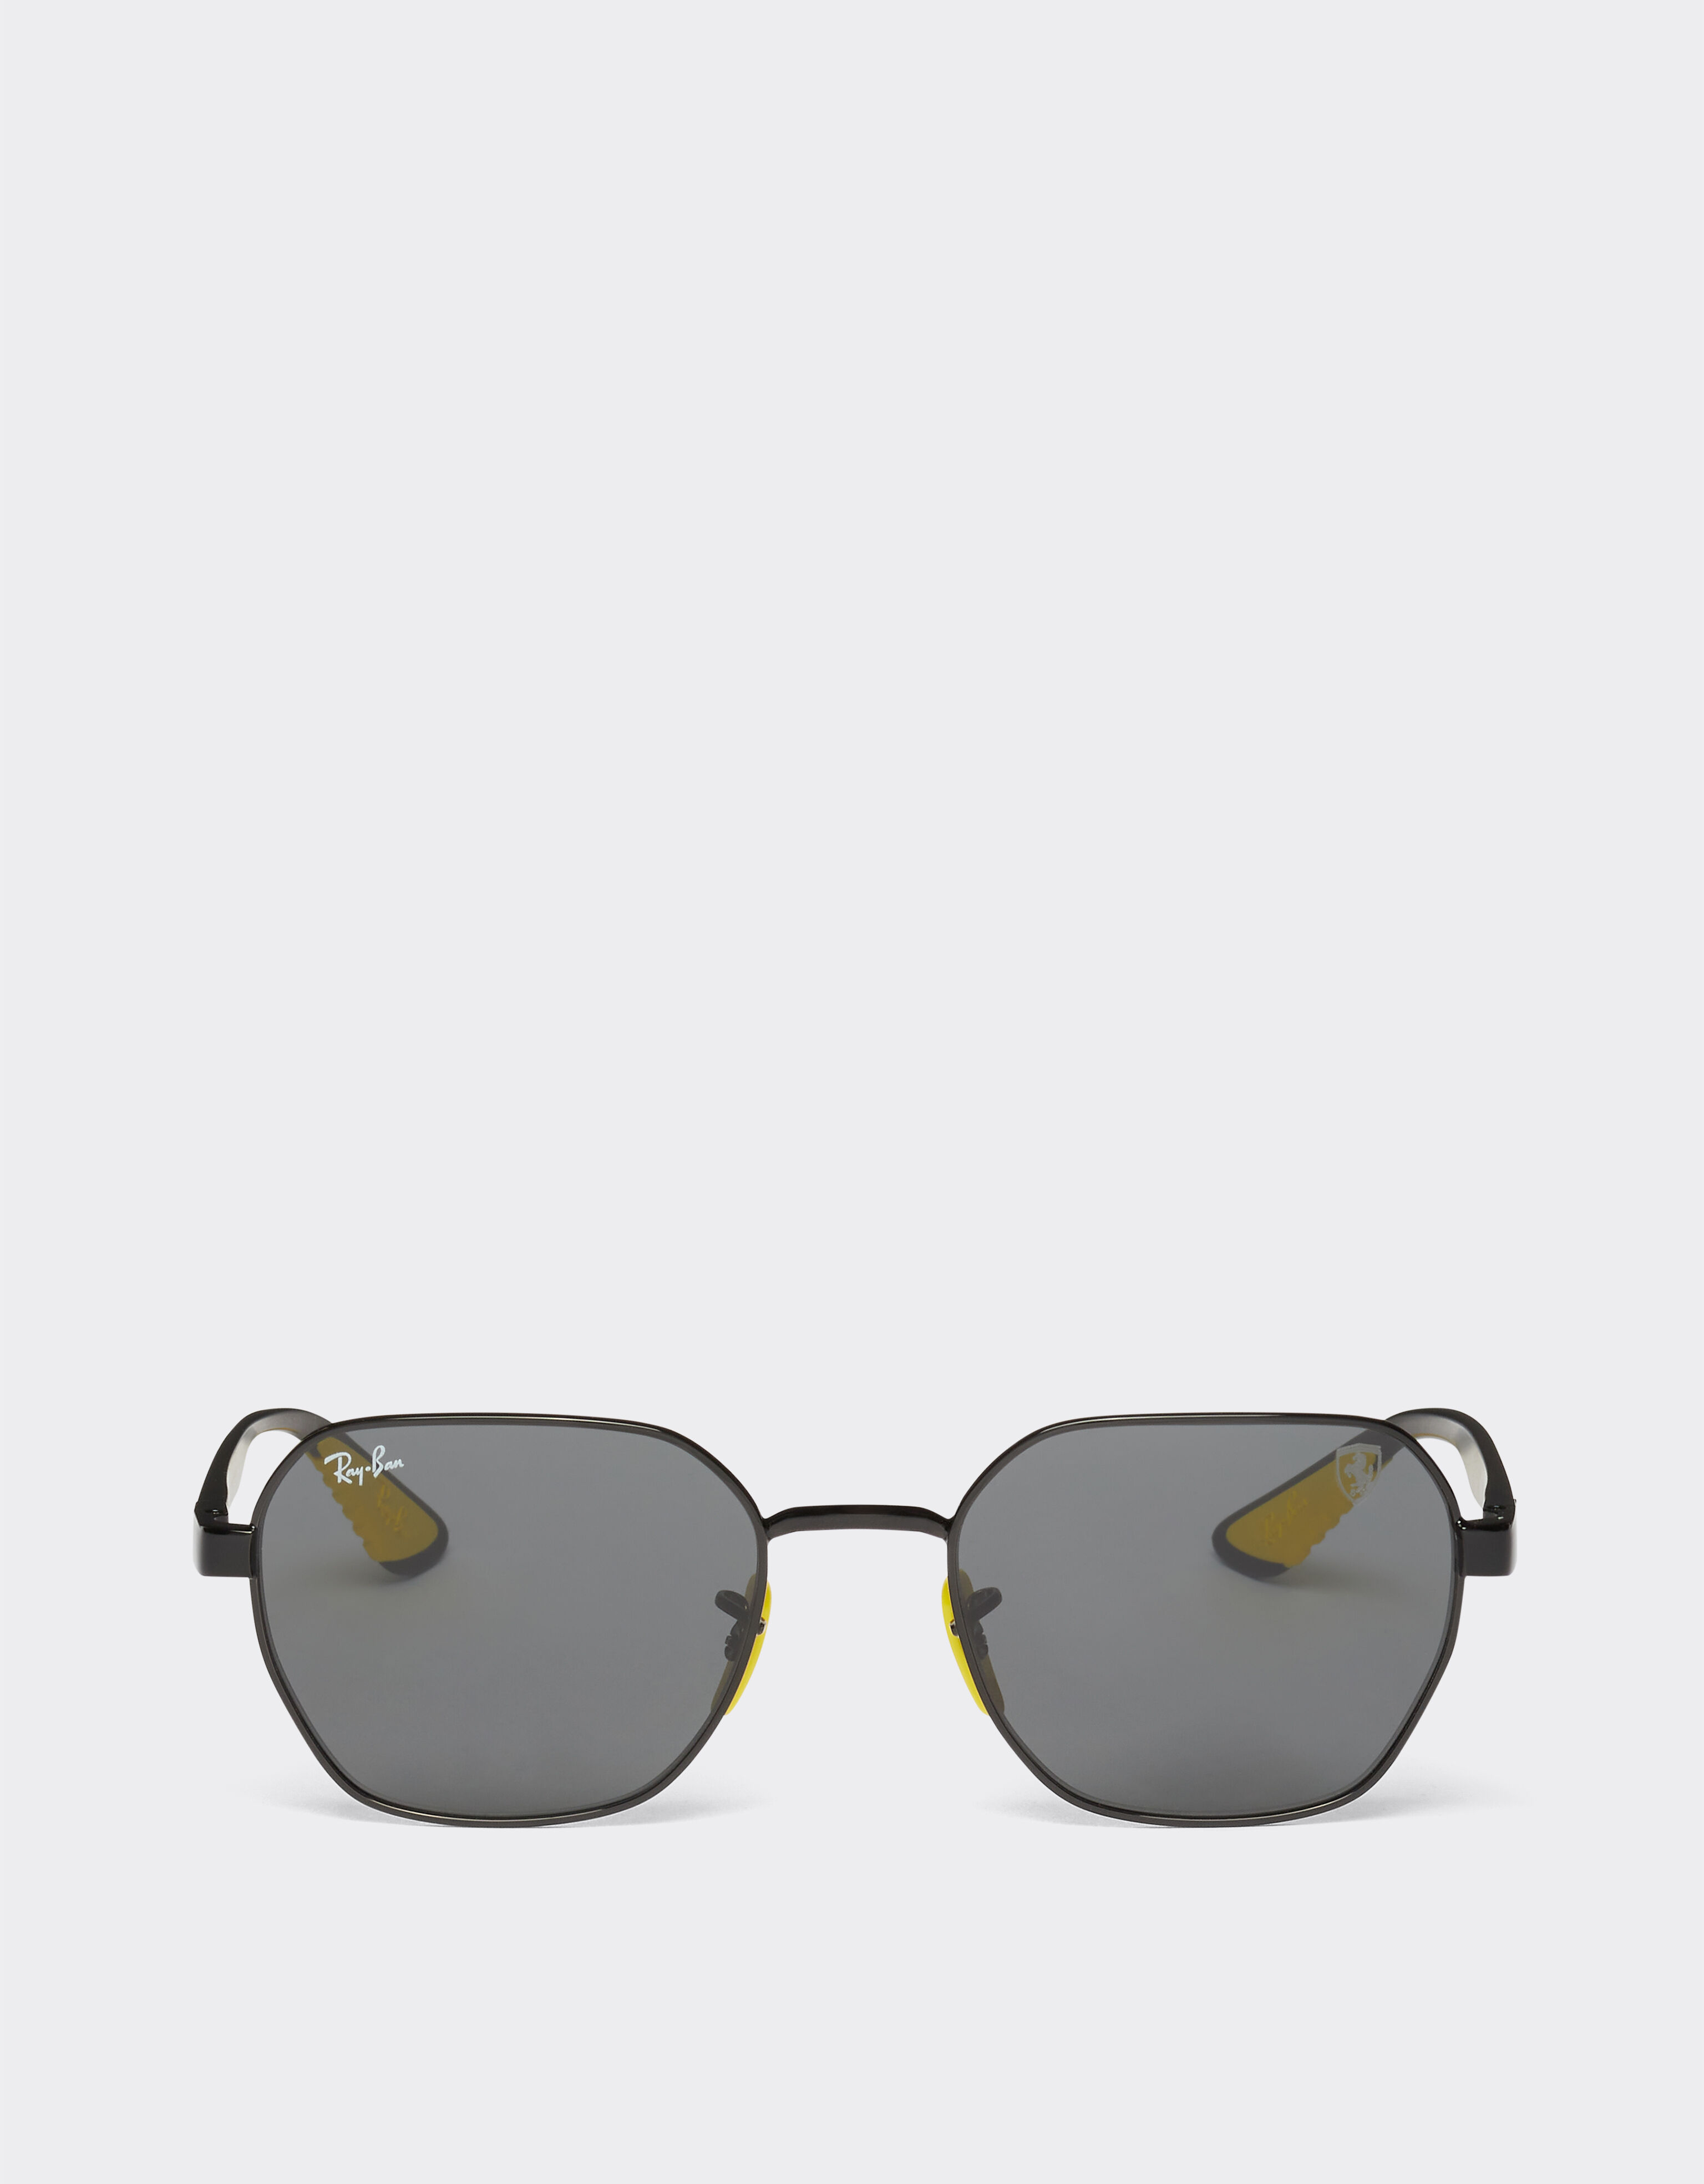 Ferrari Ray-Ban for Scuderia Ferrari 0RB3794M black metal sunglasses with grey lenses Optical White F1258f